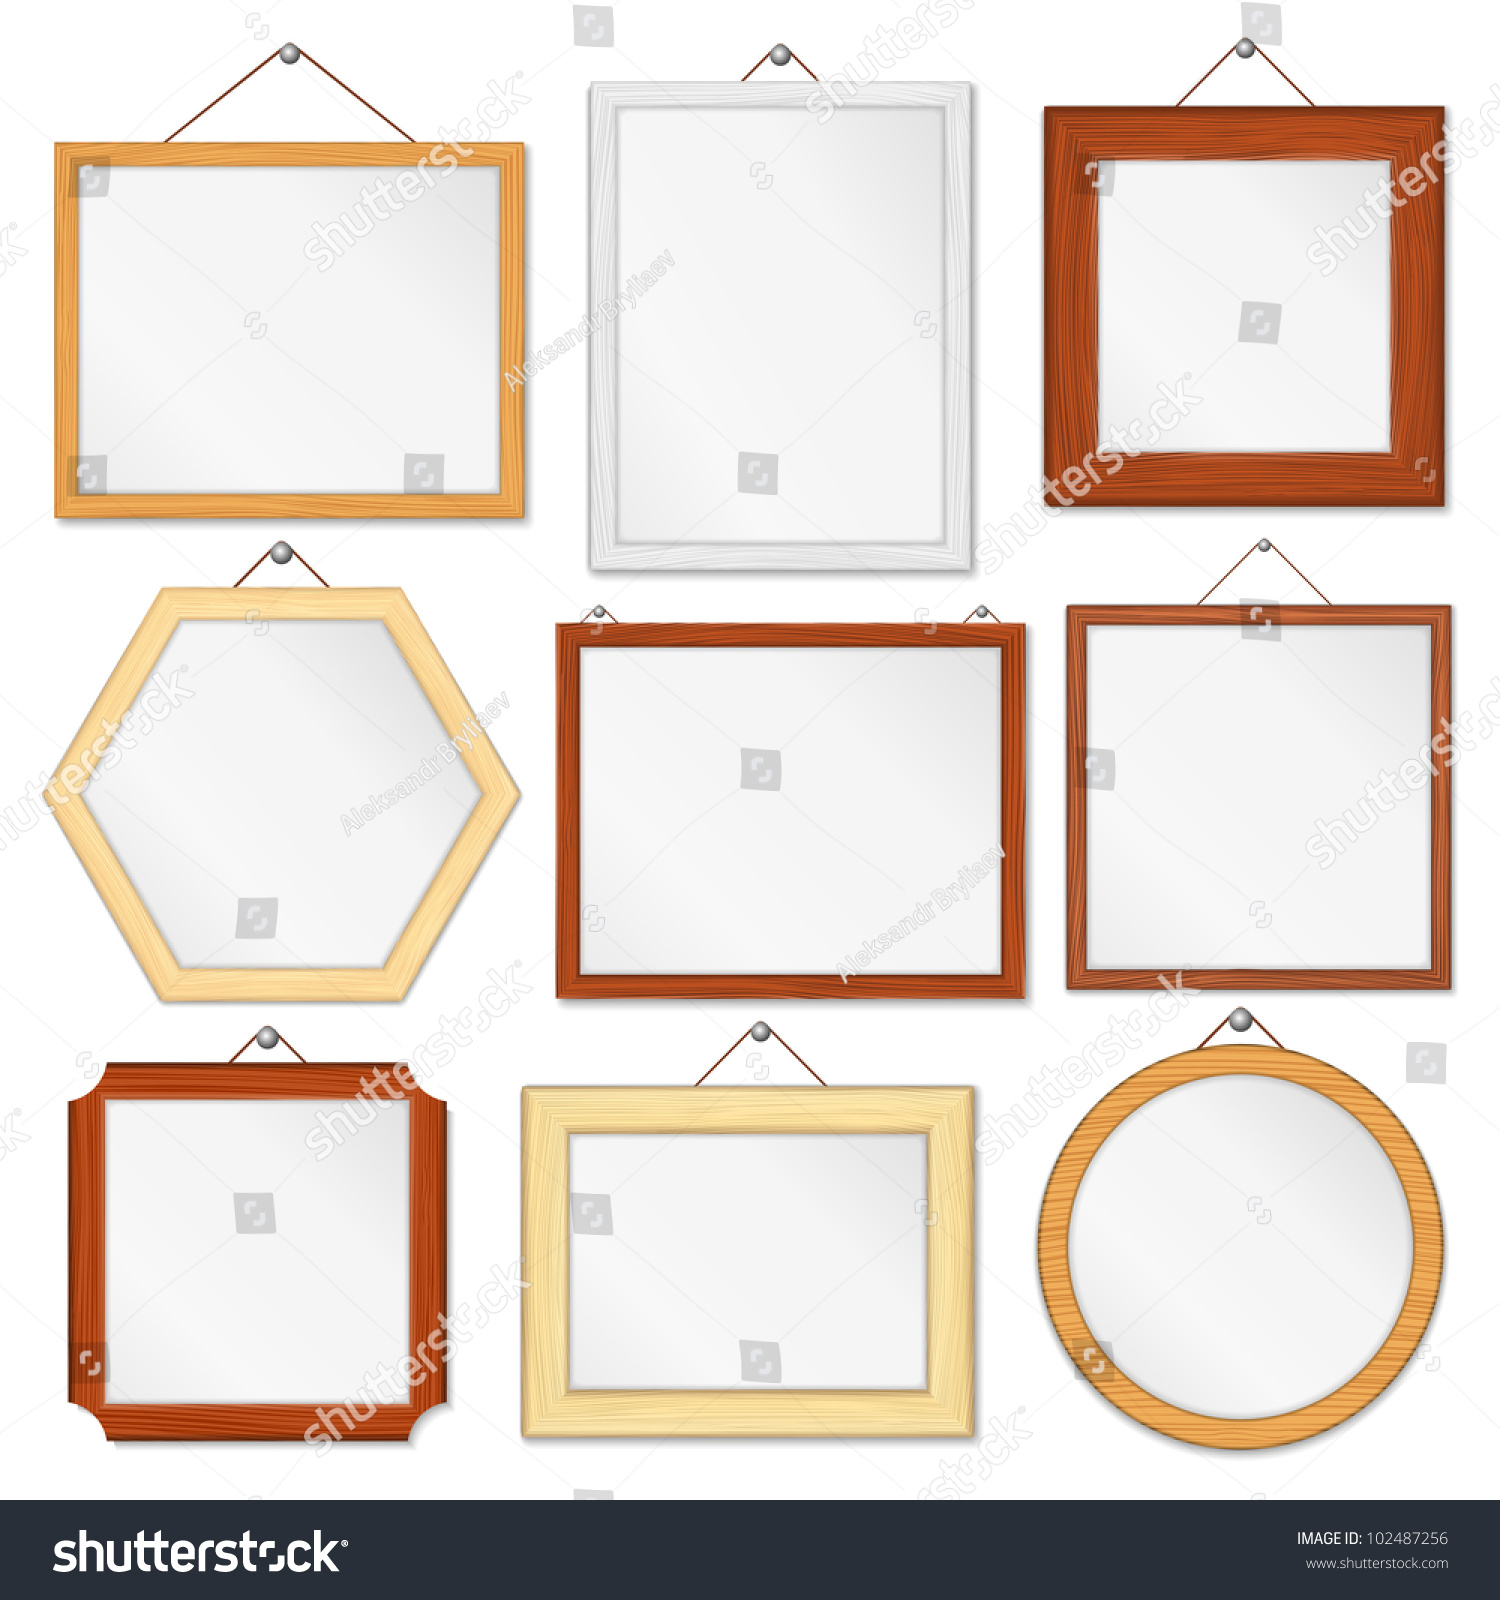 Set Of Wooden Frames On White Background, Vector Eps10 Illustration